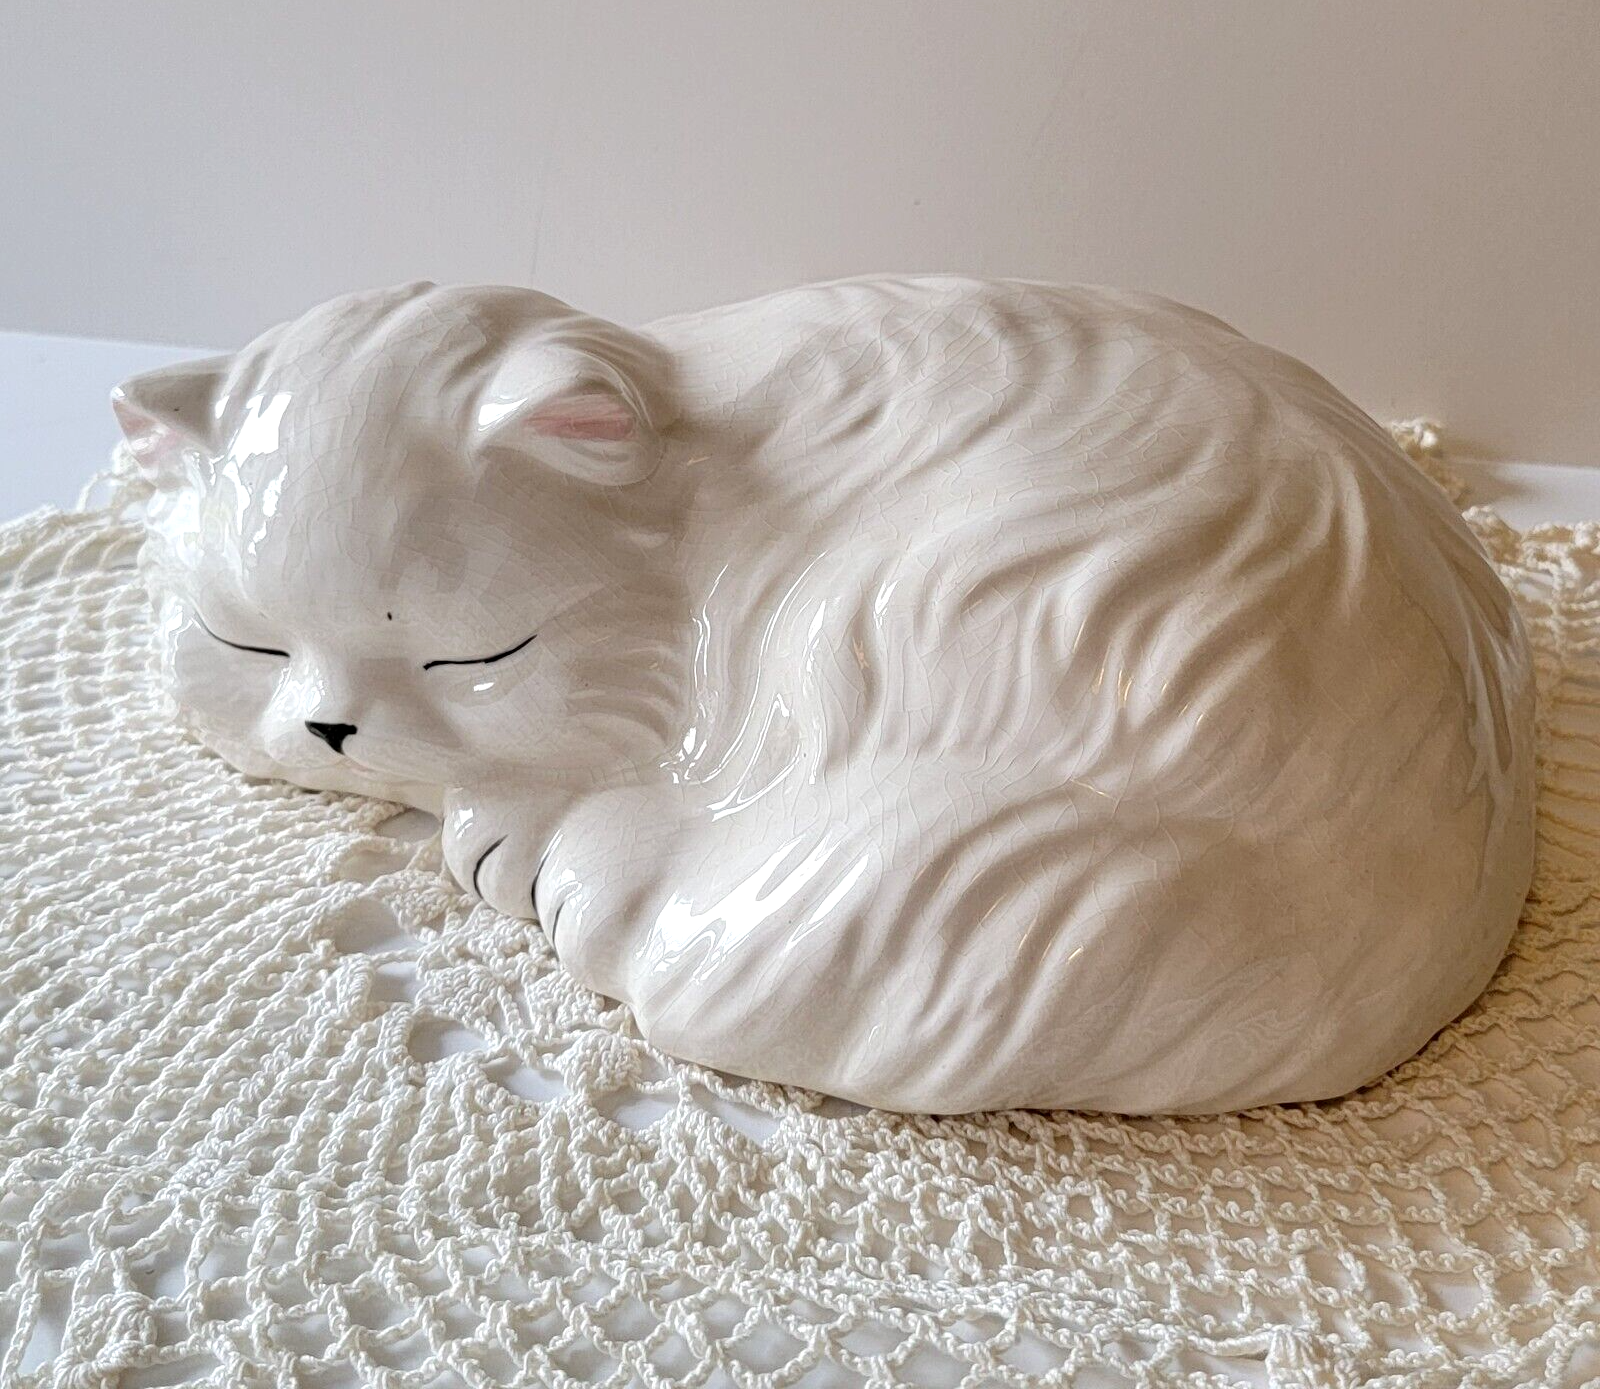 Vintage Ceramic Persian Sleeping Kitty Cat Curled Up 1970's Era 11" Long White